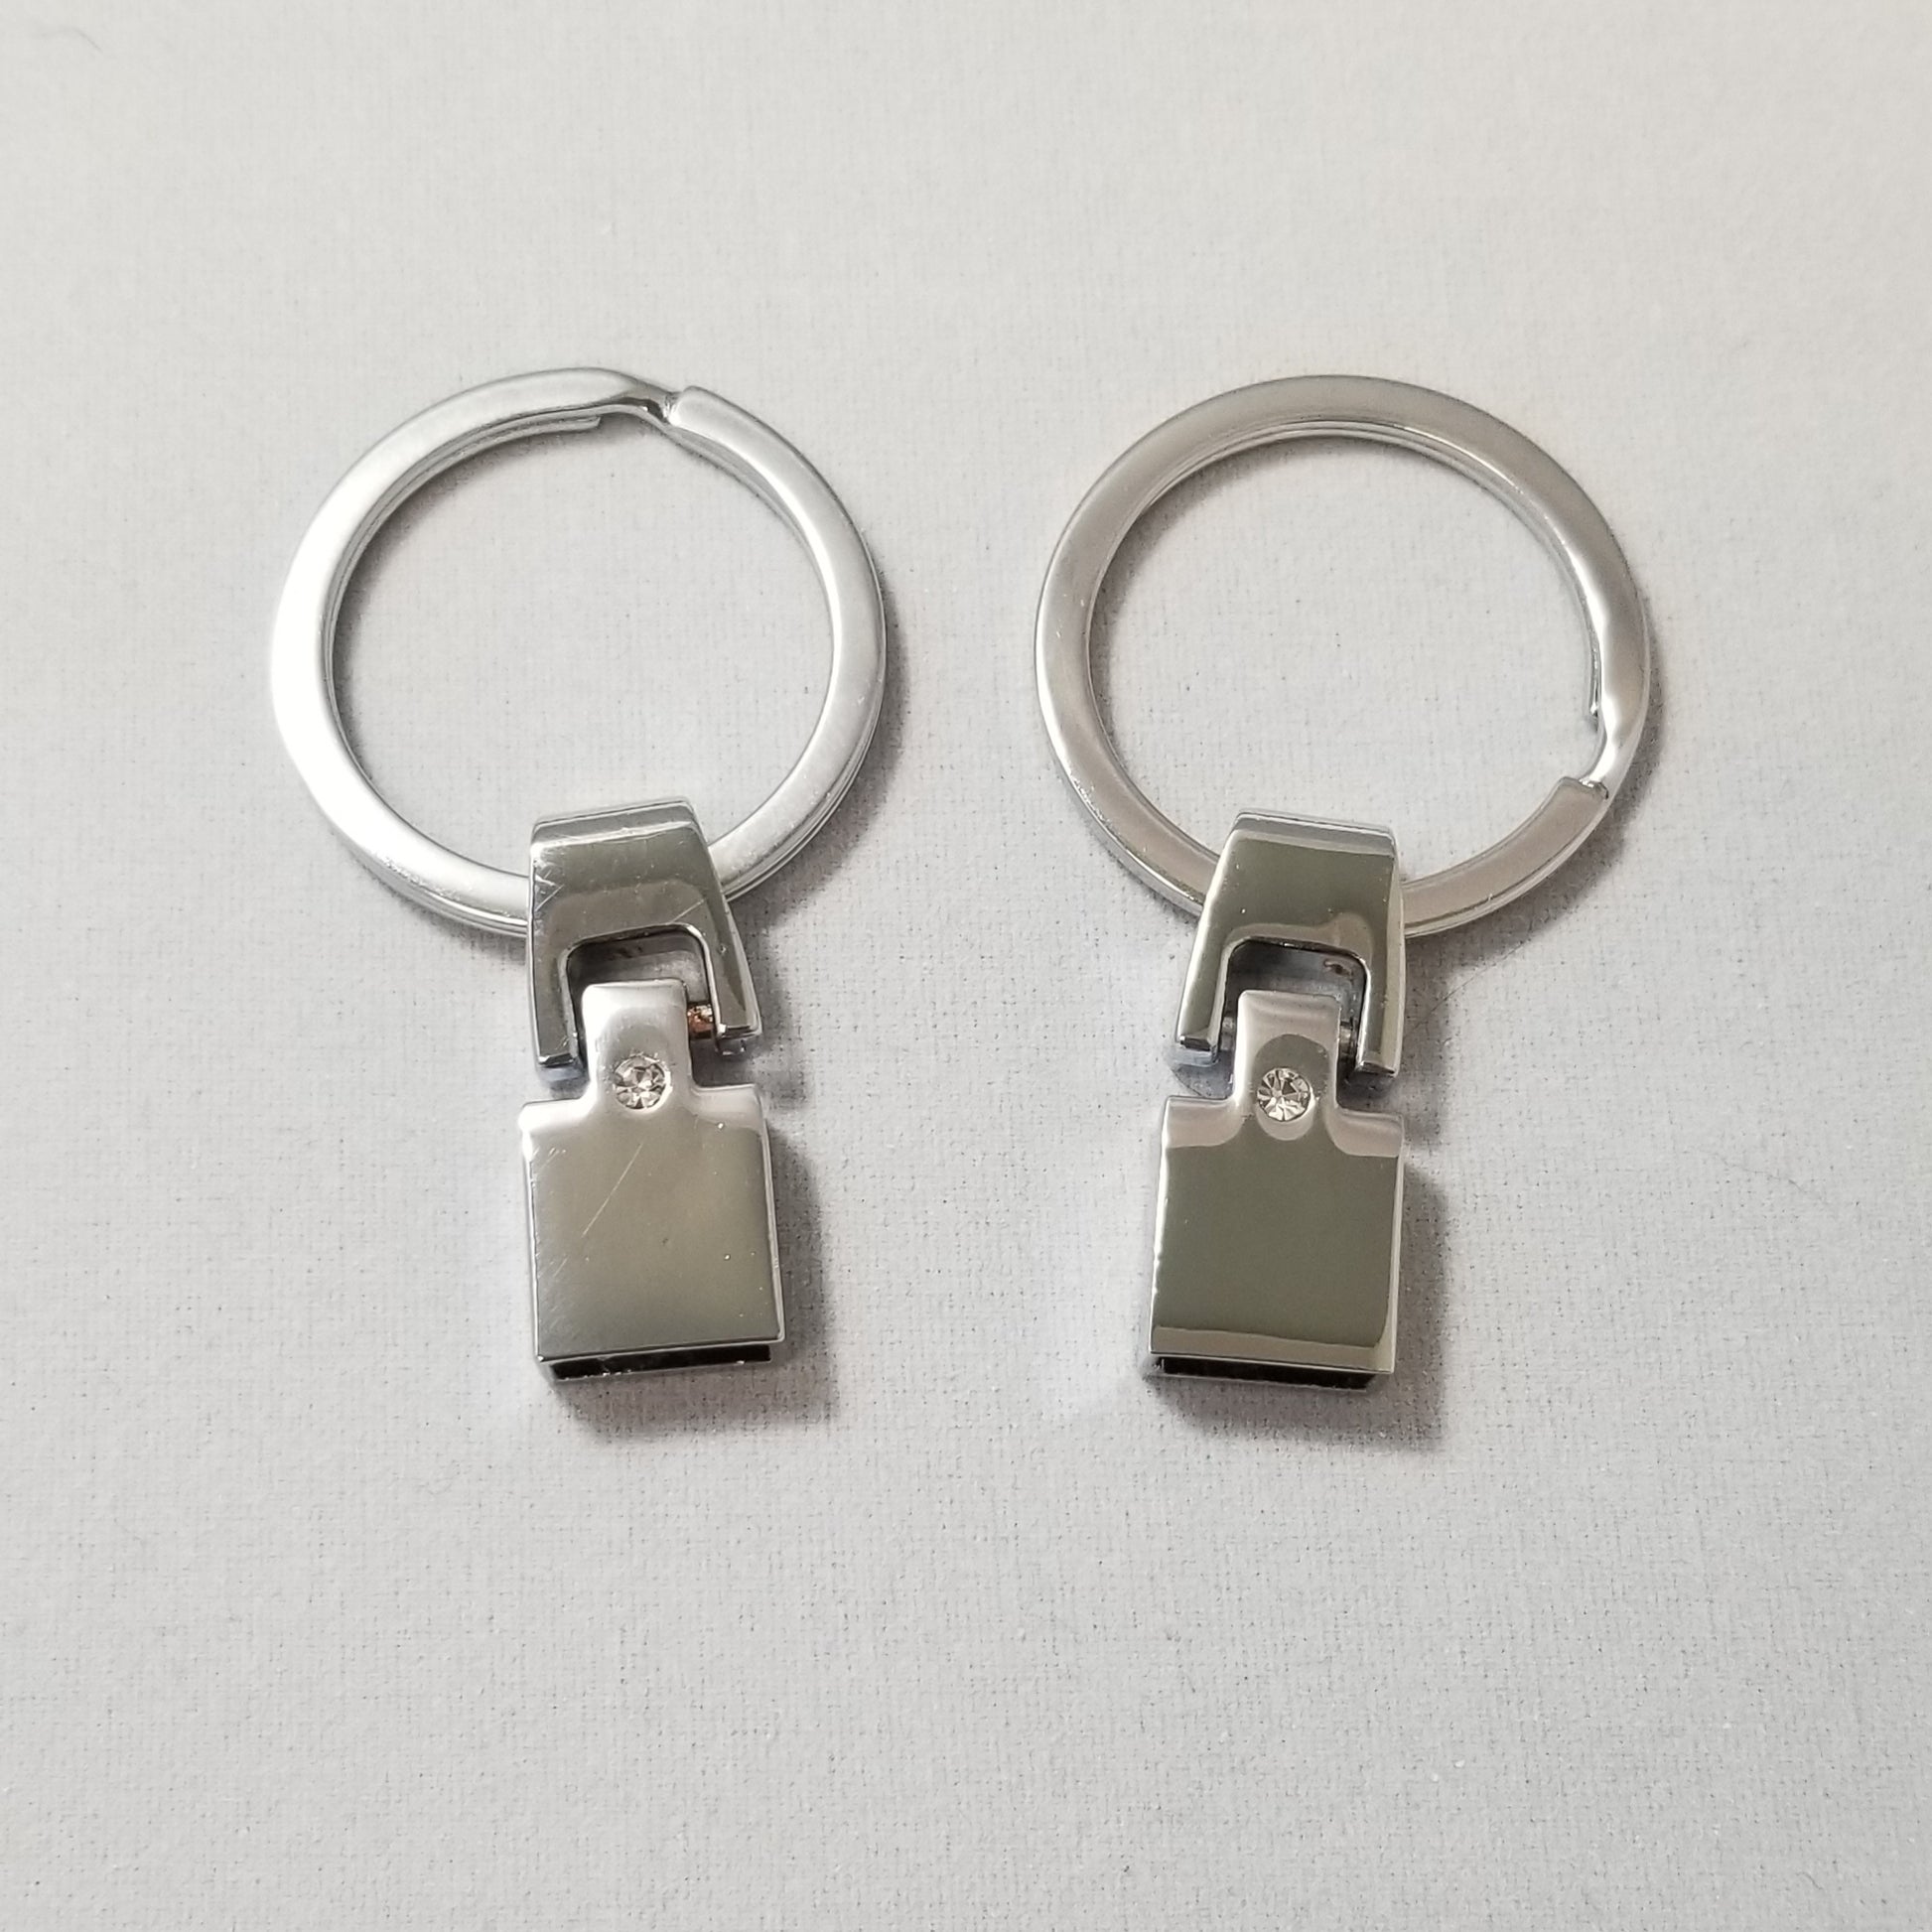 Key Ring Hardware (D Ring, Key Fob, Keyring) Key Ring w/Chain